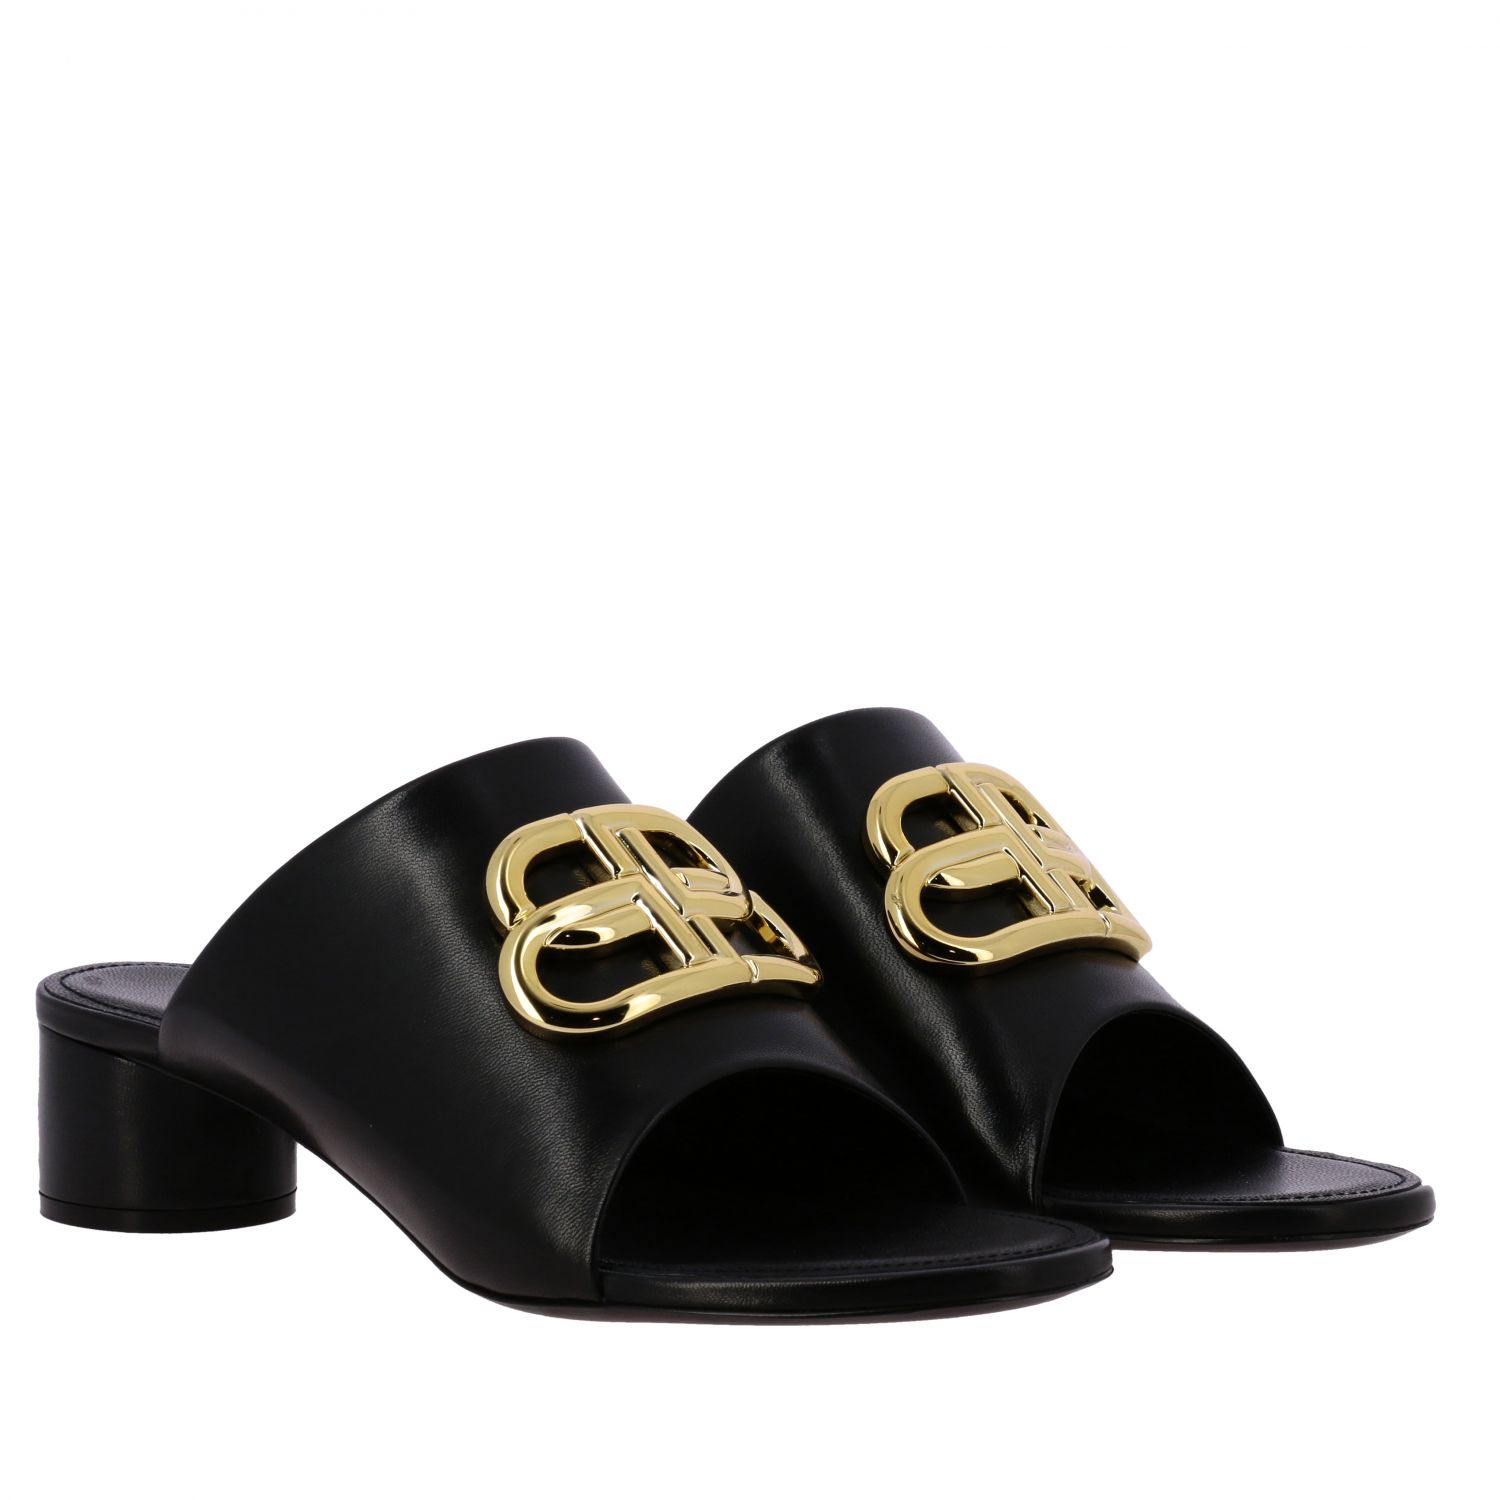 Balenciaga Outlet: Oval BB leather sandal | Heeled Sandals Balenciaga ...